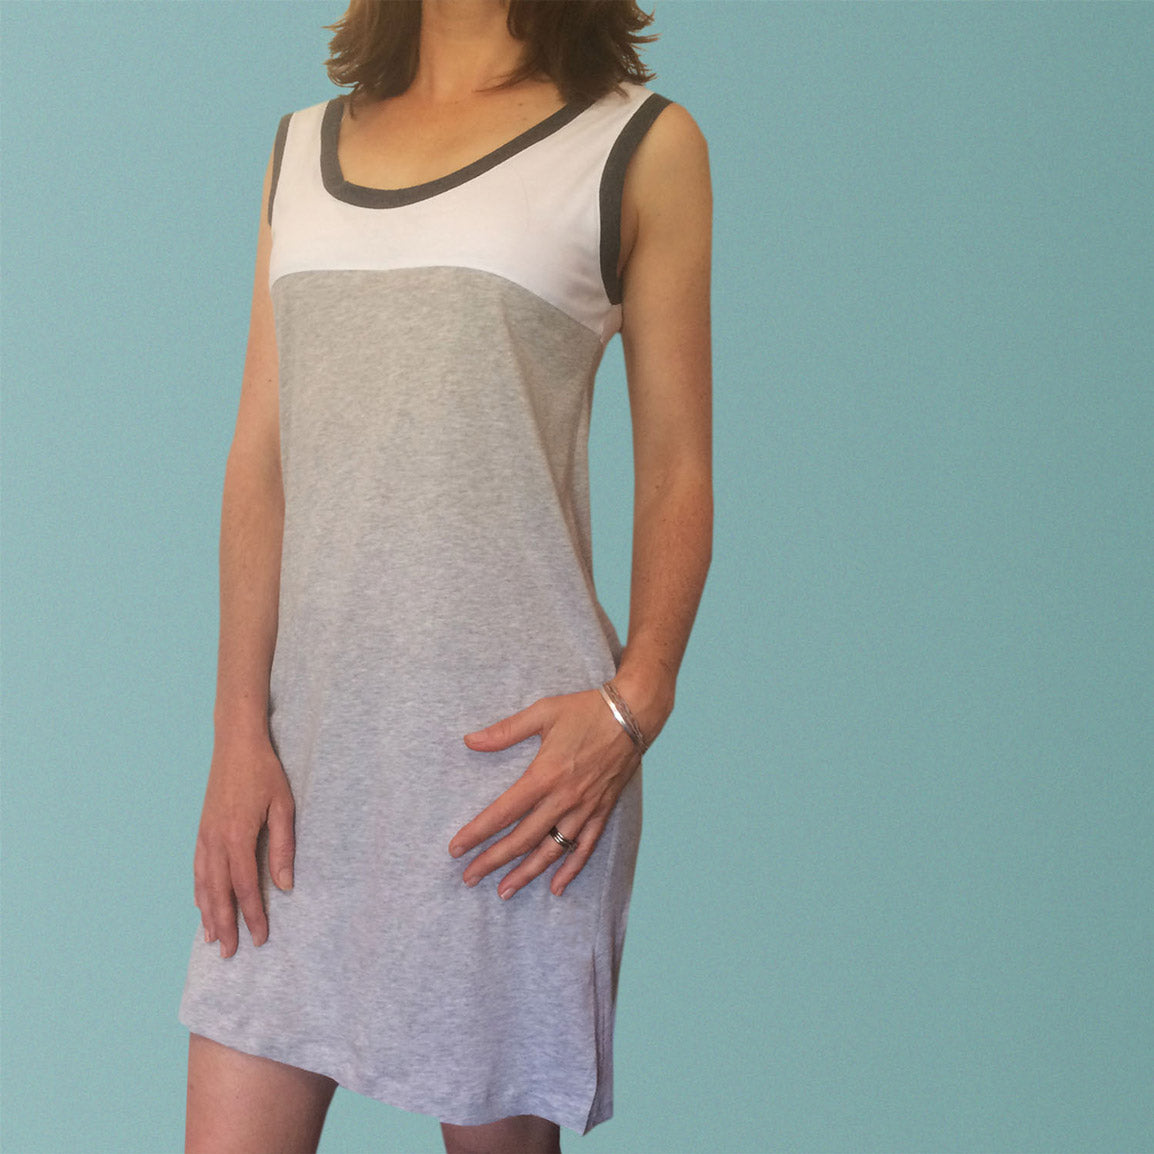 Womens organic clothing. Organic cotton nighties Australia. Winter nightie in soft white and grey organic cotton jersey.